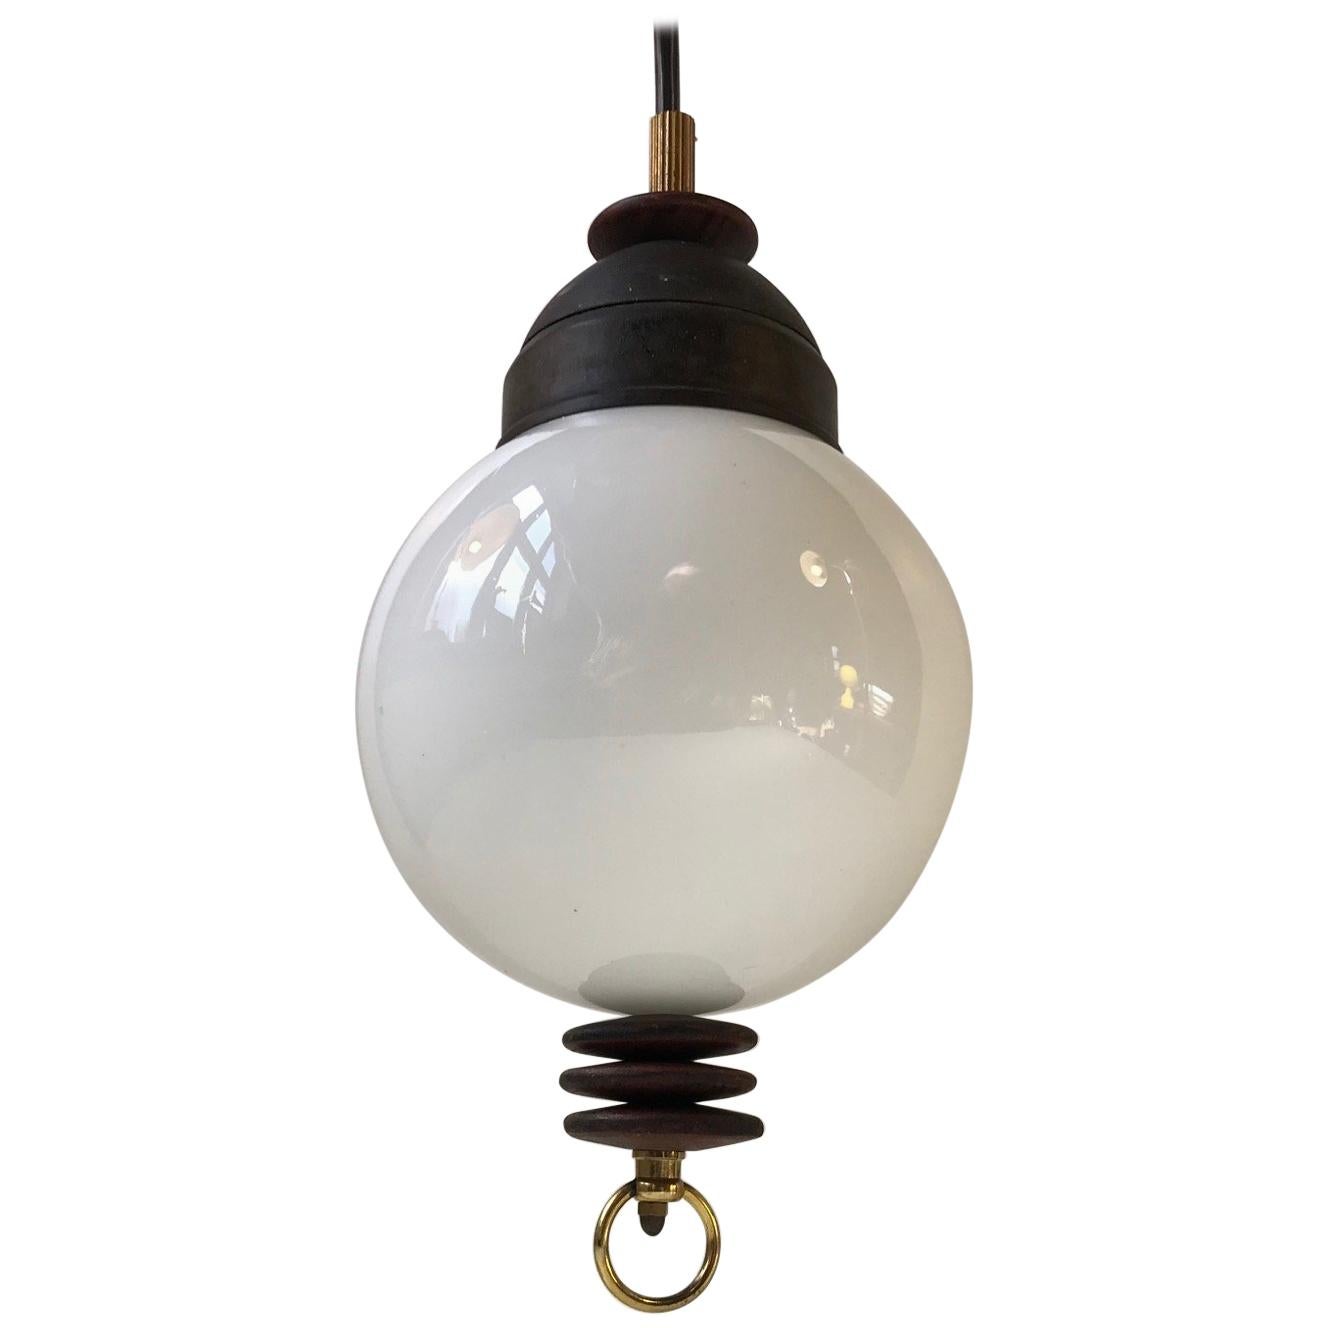 Unusual Midcentury Pendant Lamp with Rosewood Rattle, Denmark, 1950s